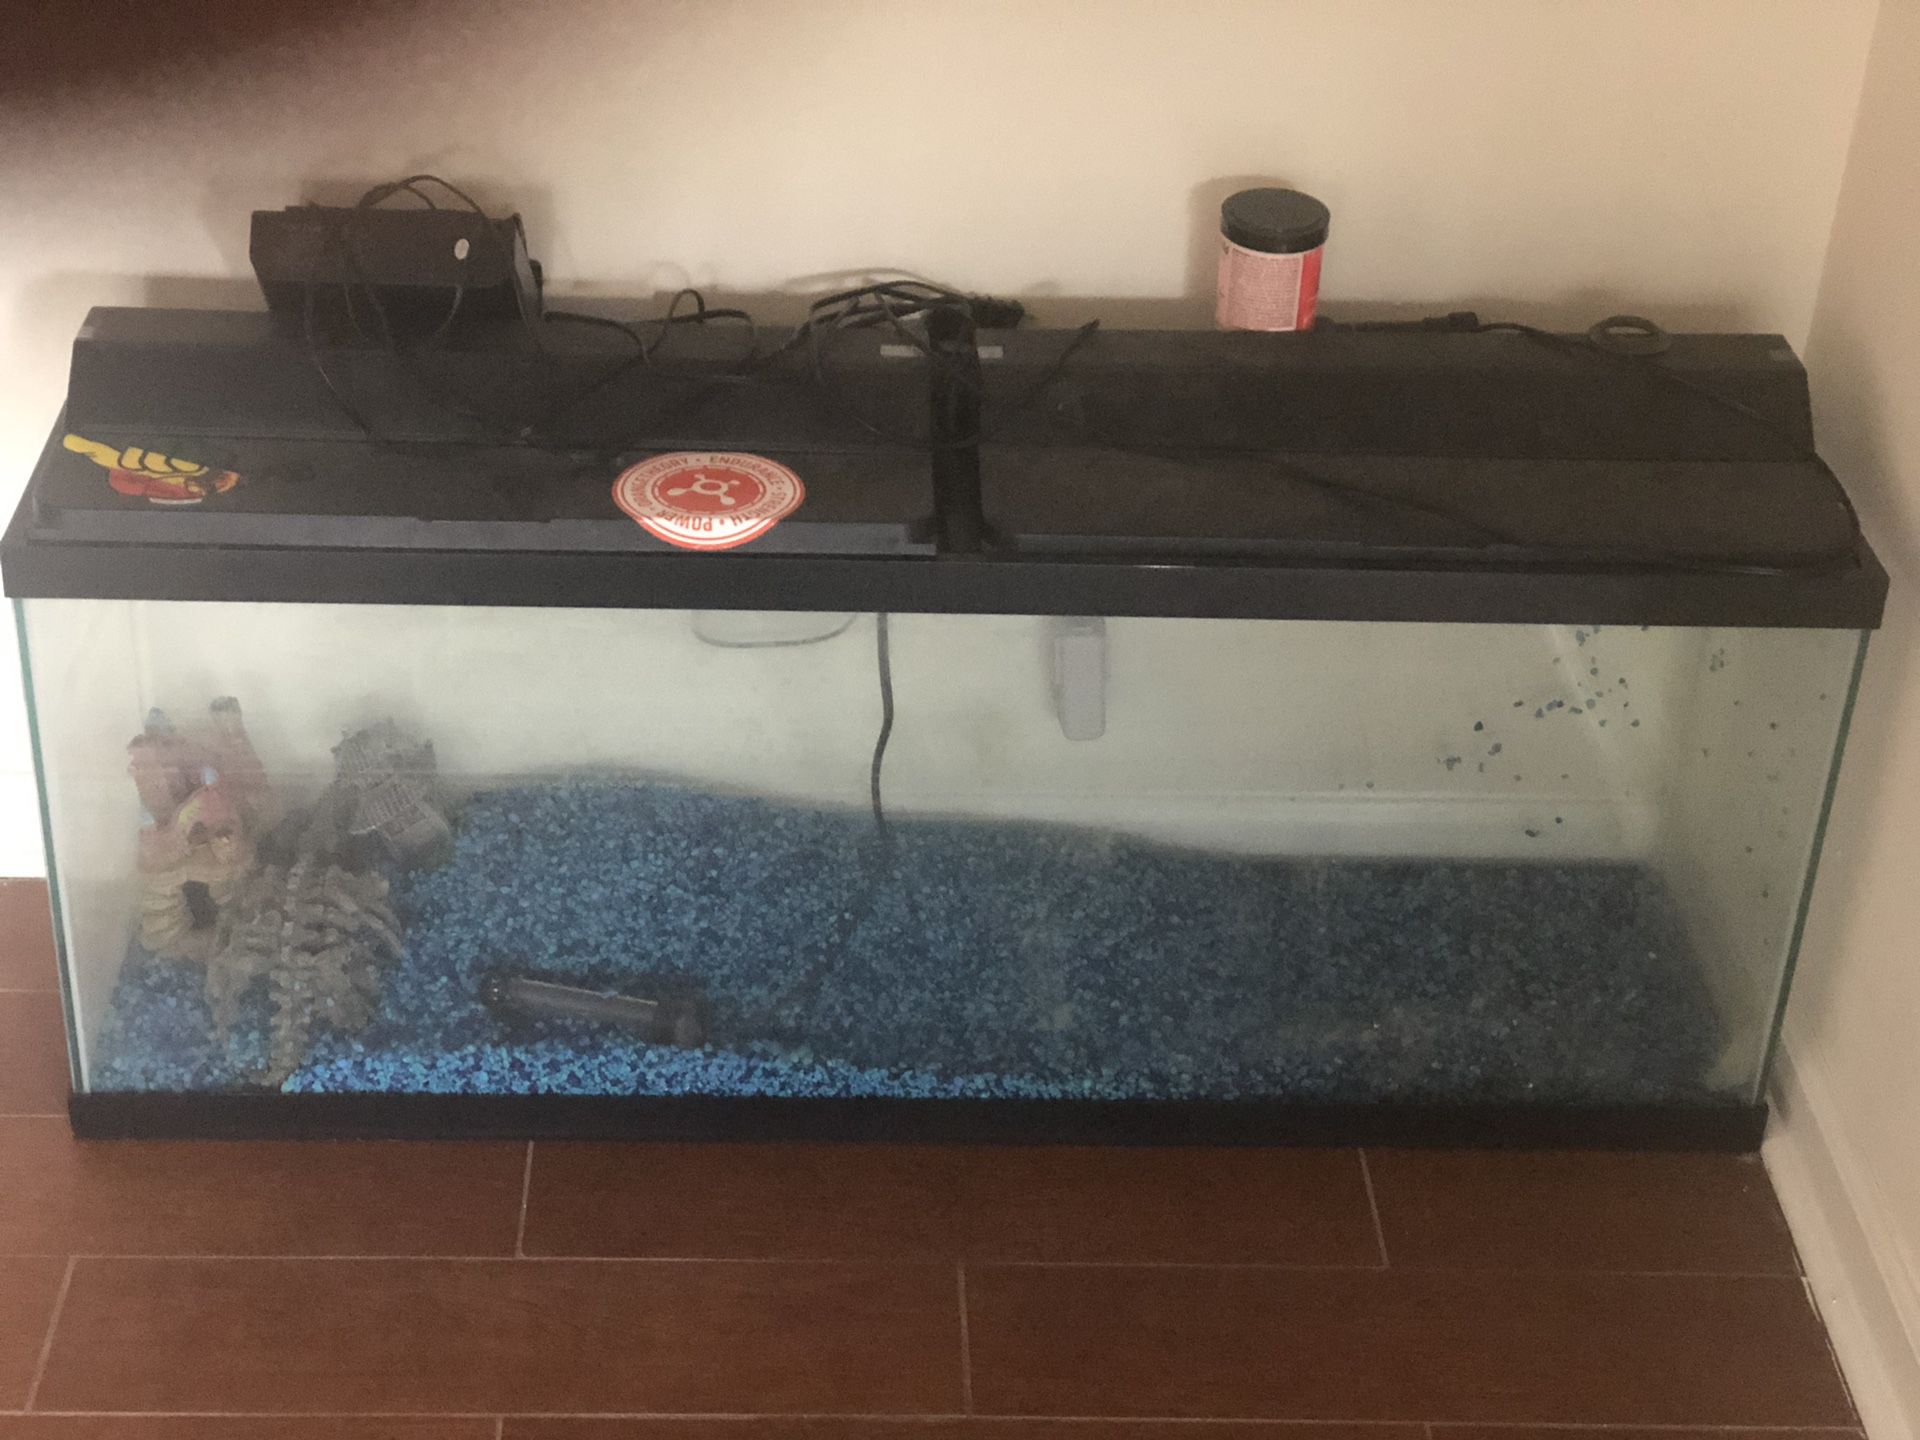 55 gallon fish tank w/ rocks and decorations